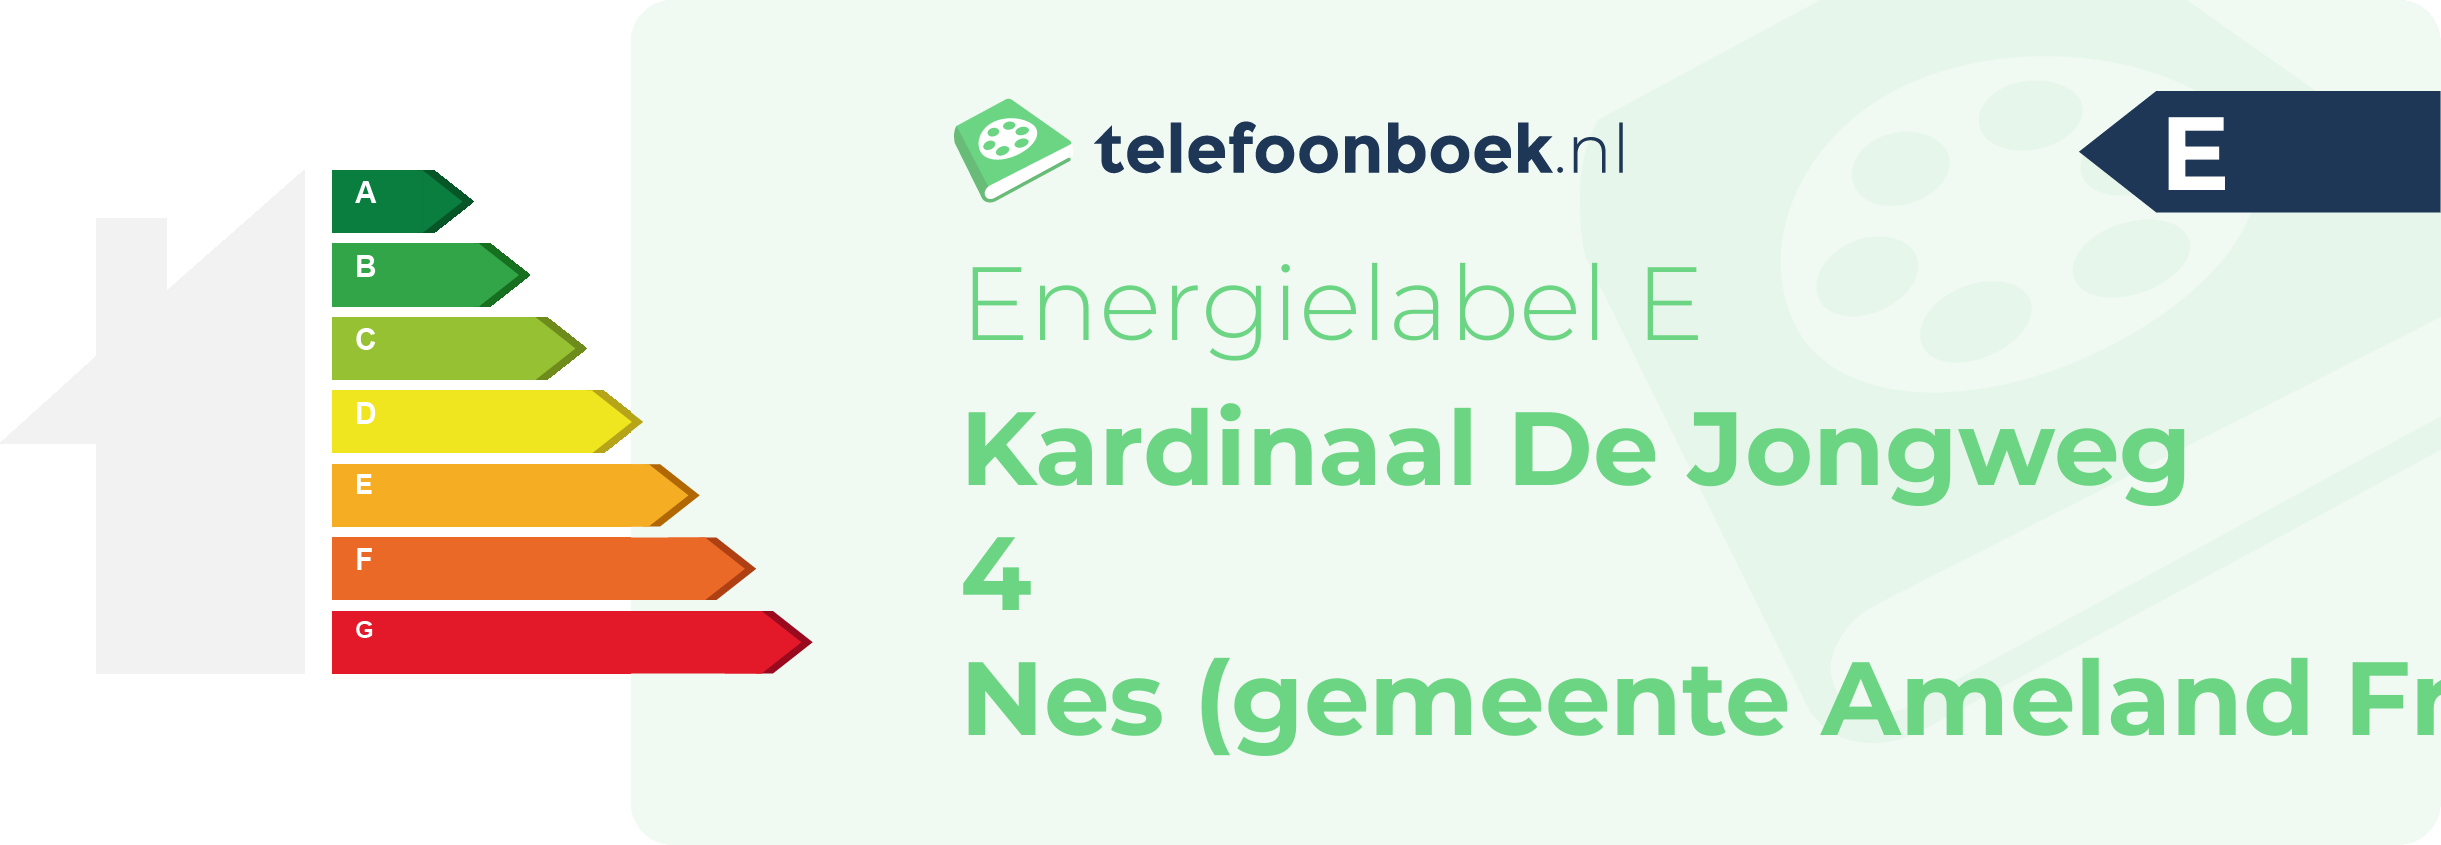 Energielabel Kardinaal De Jongweg 4 Nes (gemeente Ameland Friesland)